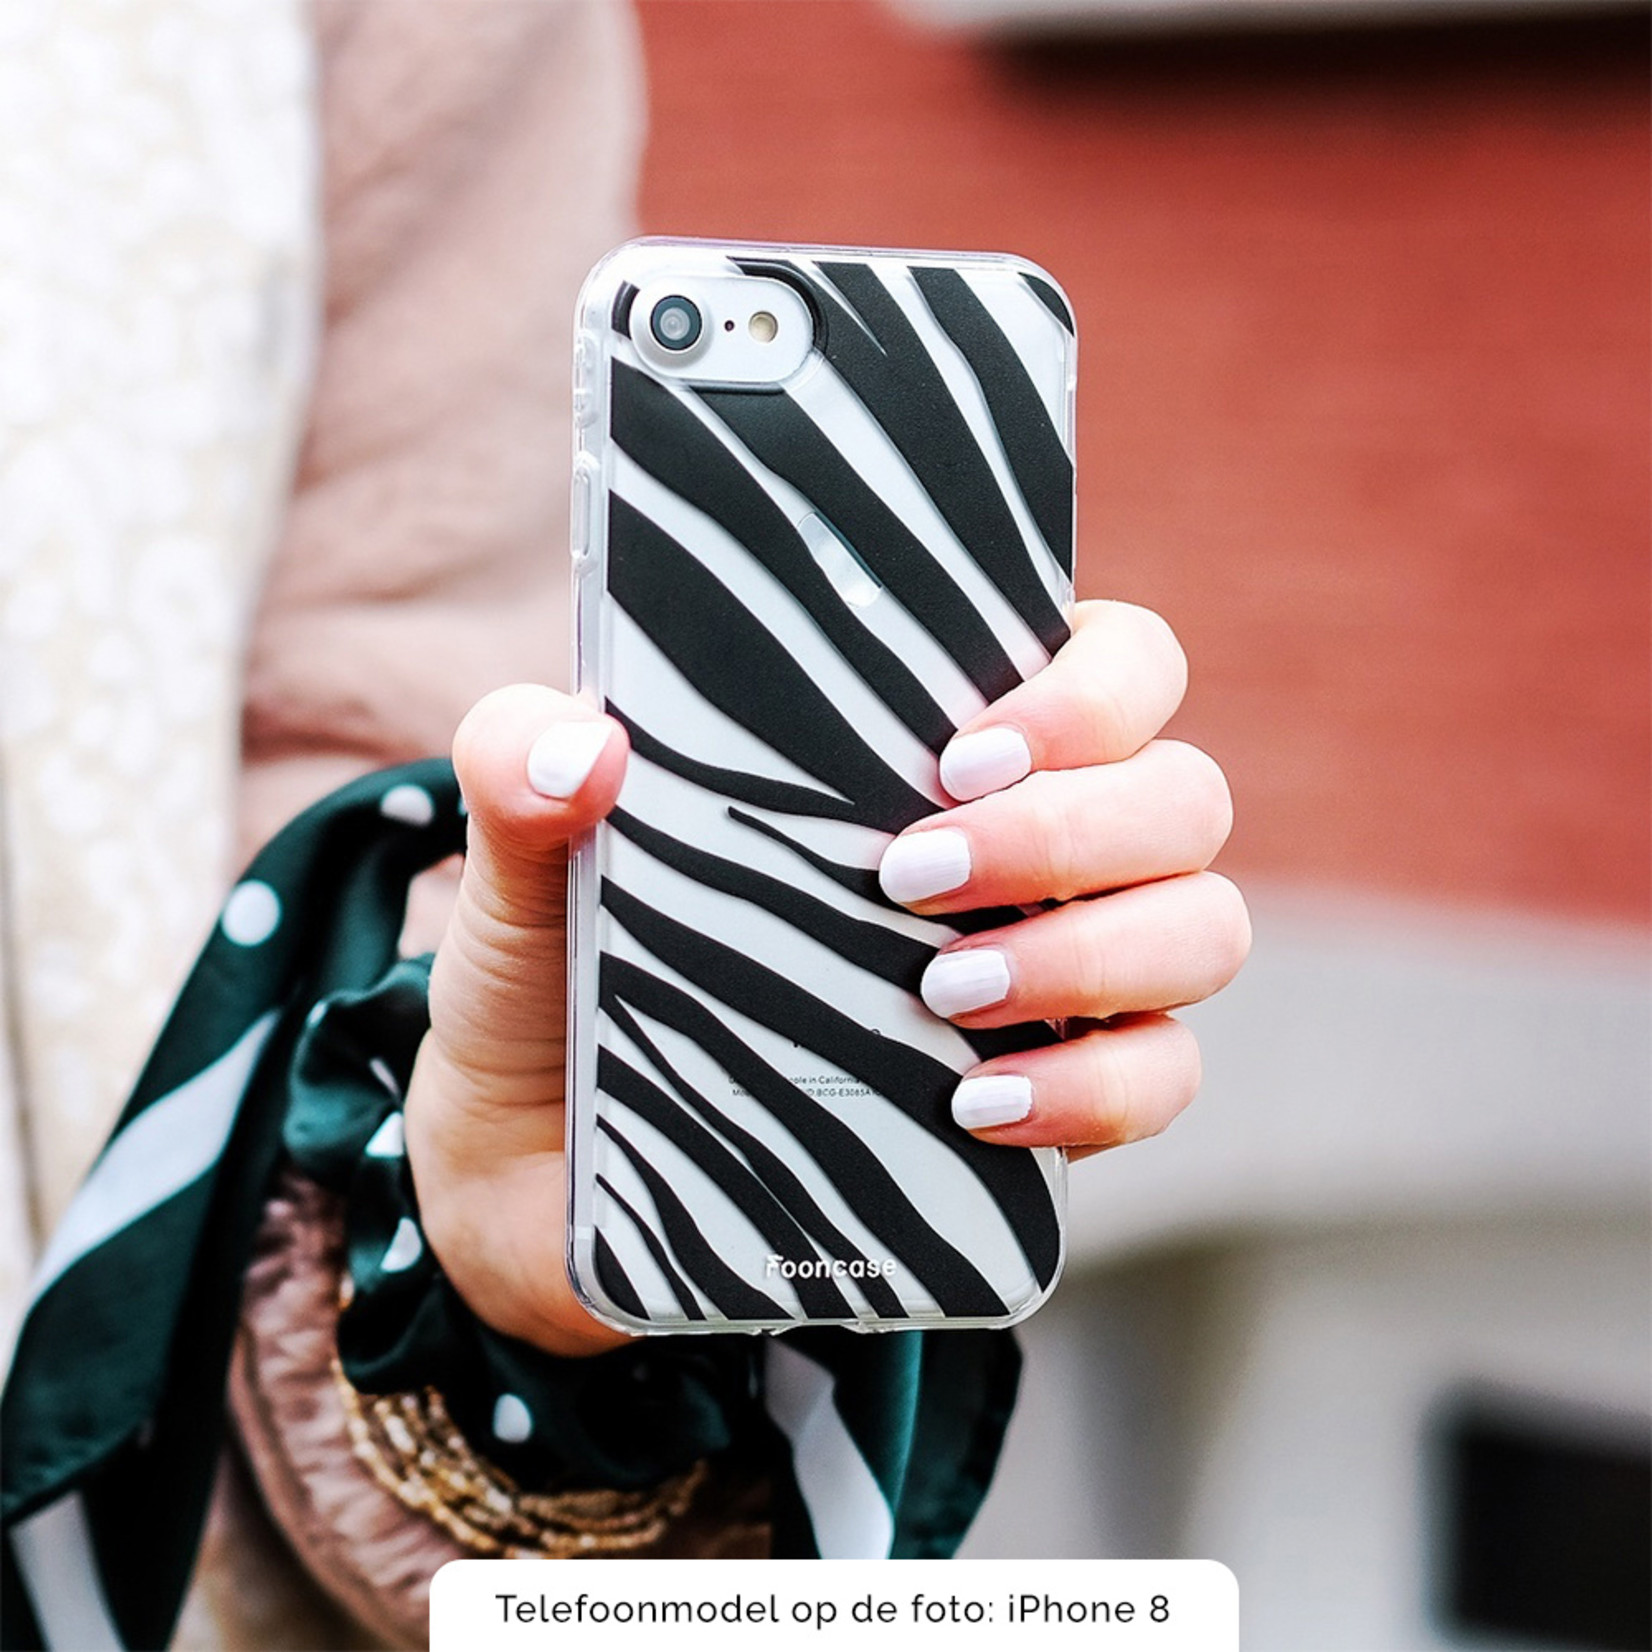 FOONCASE Iphone X Case - Zebra